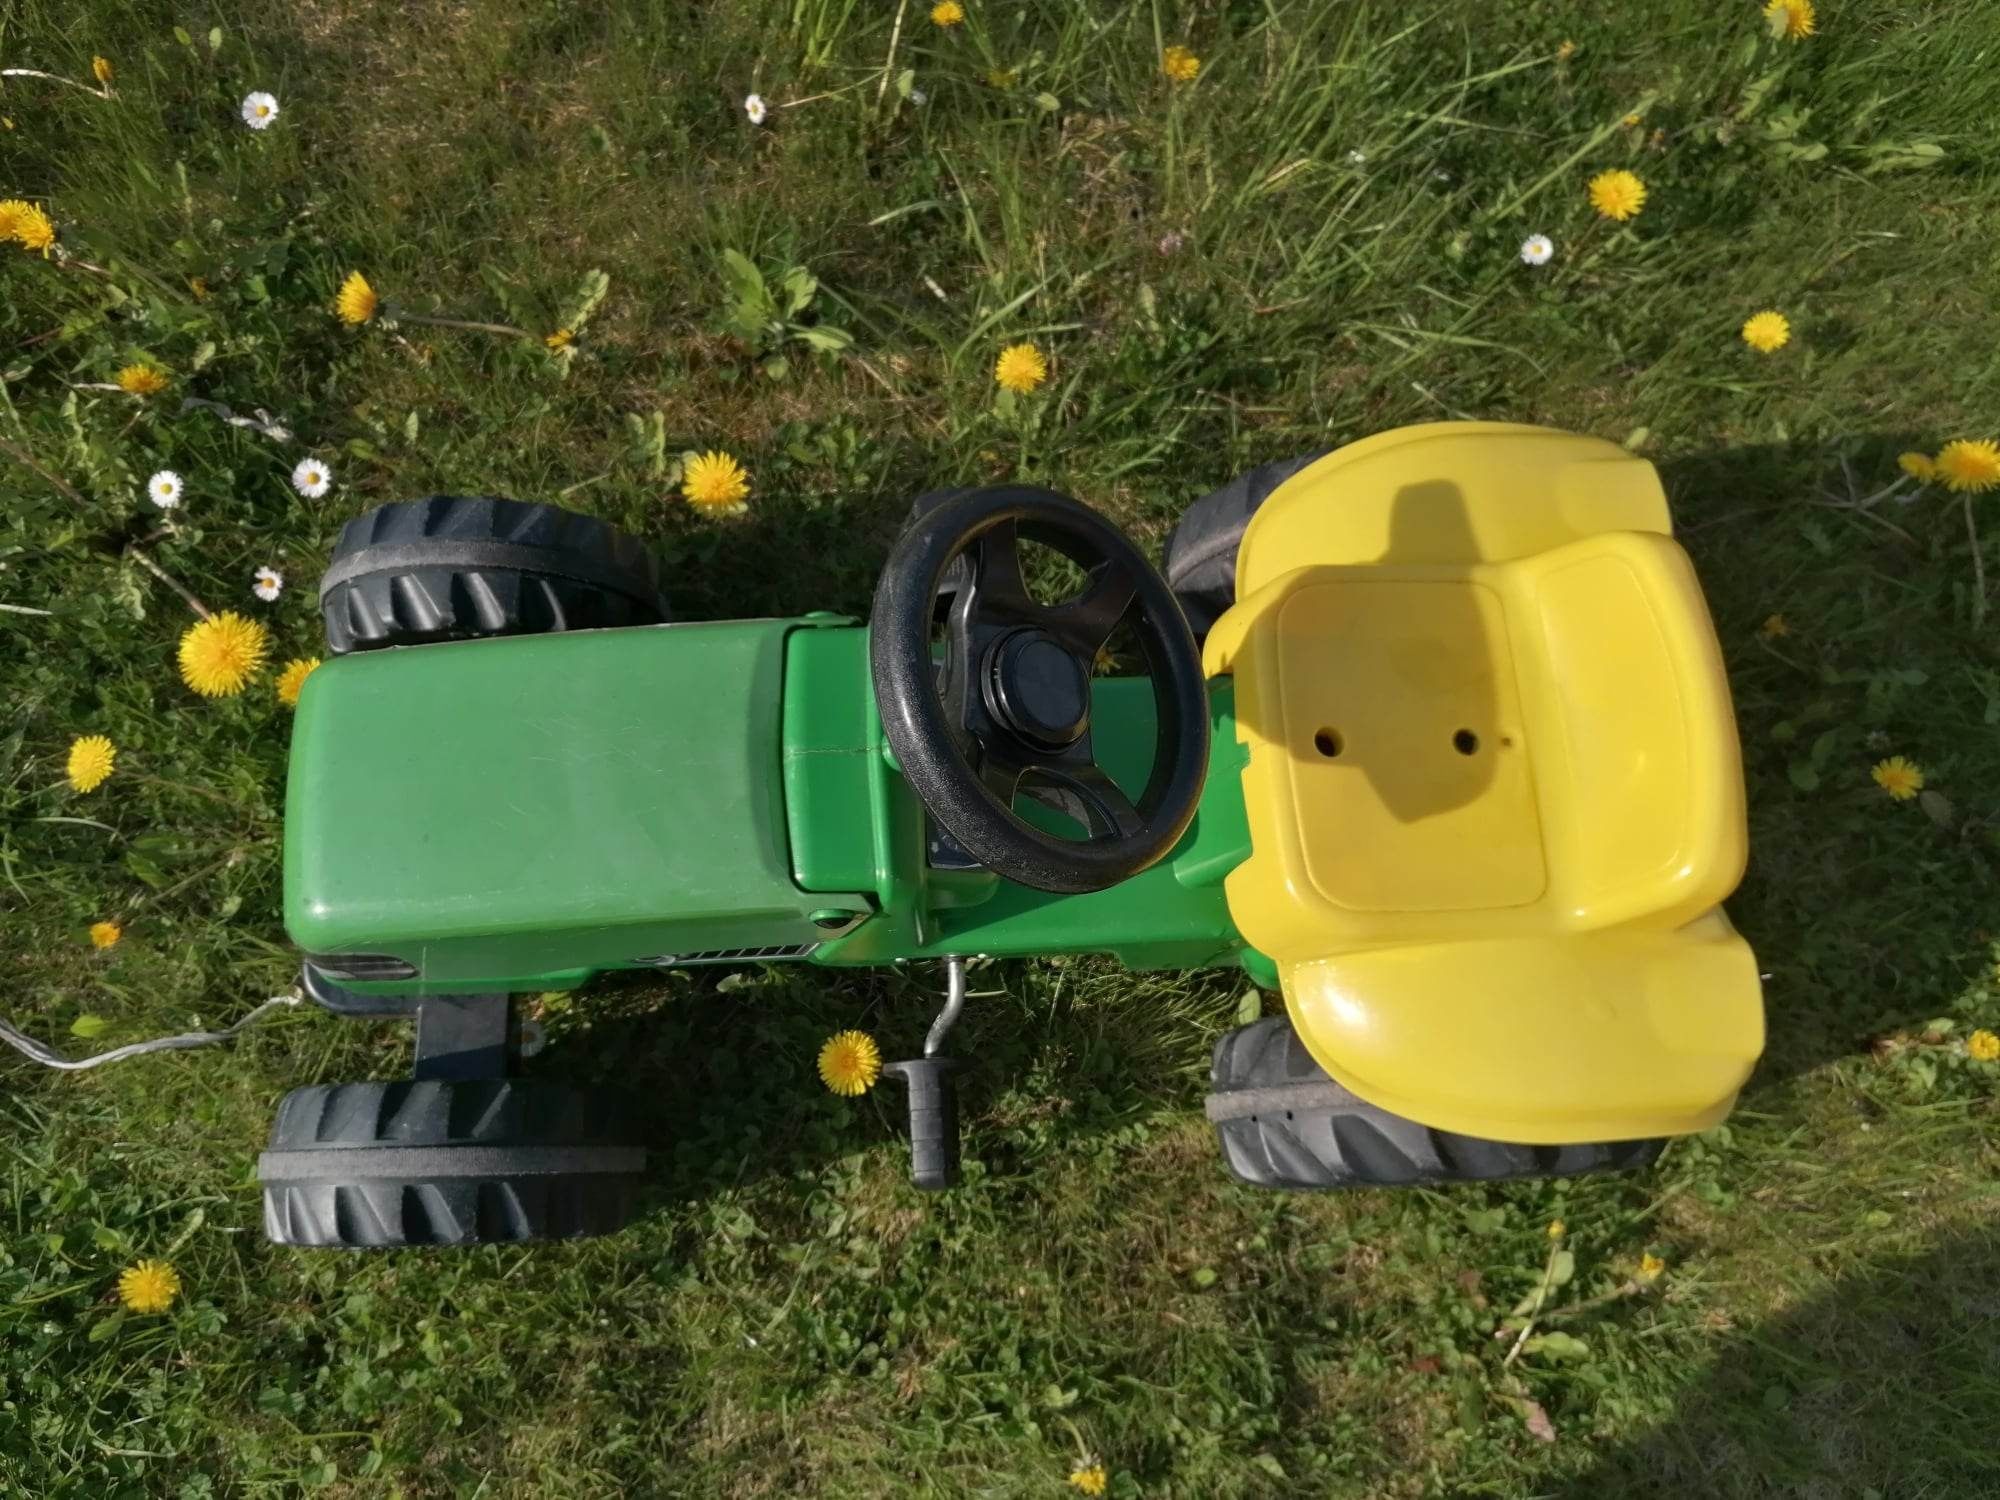 Traktorek dla dziecka